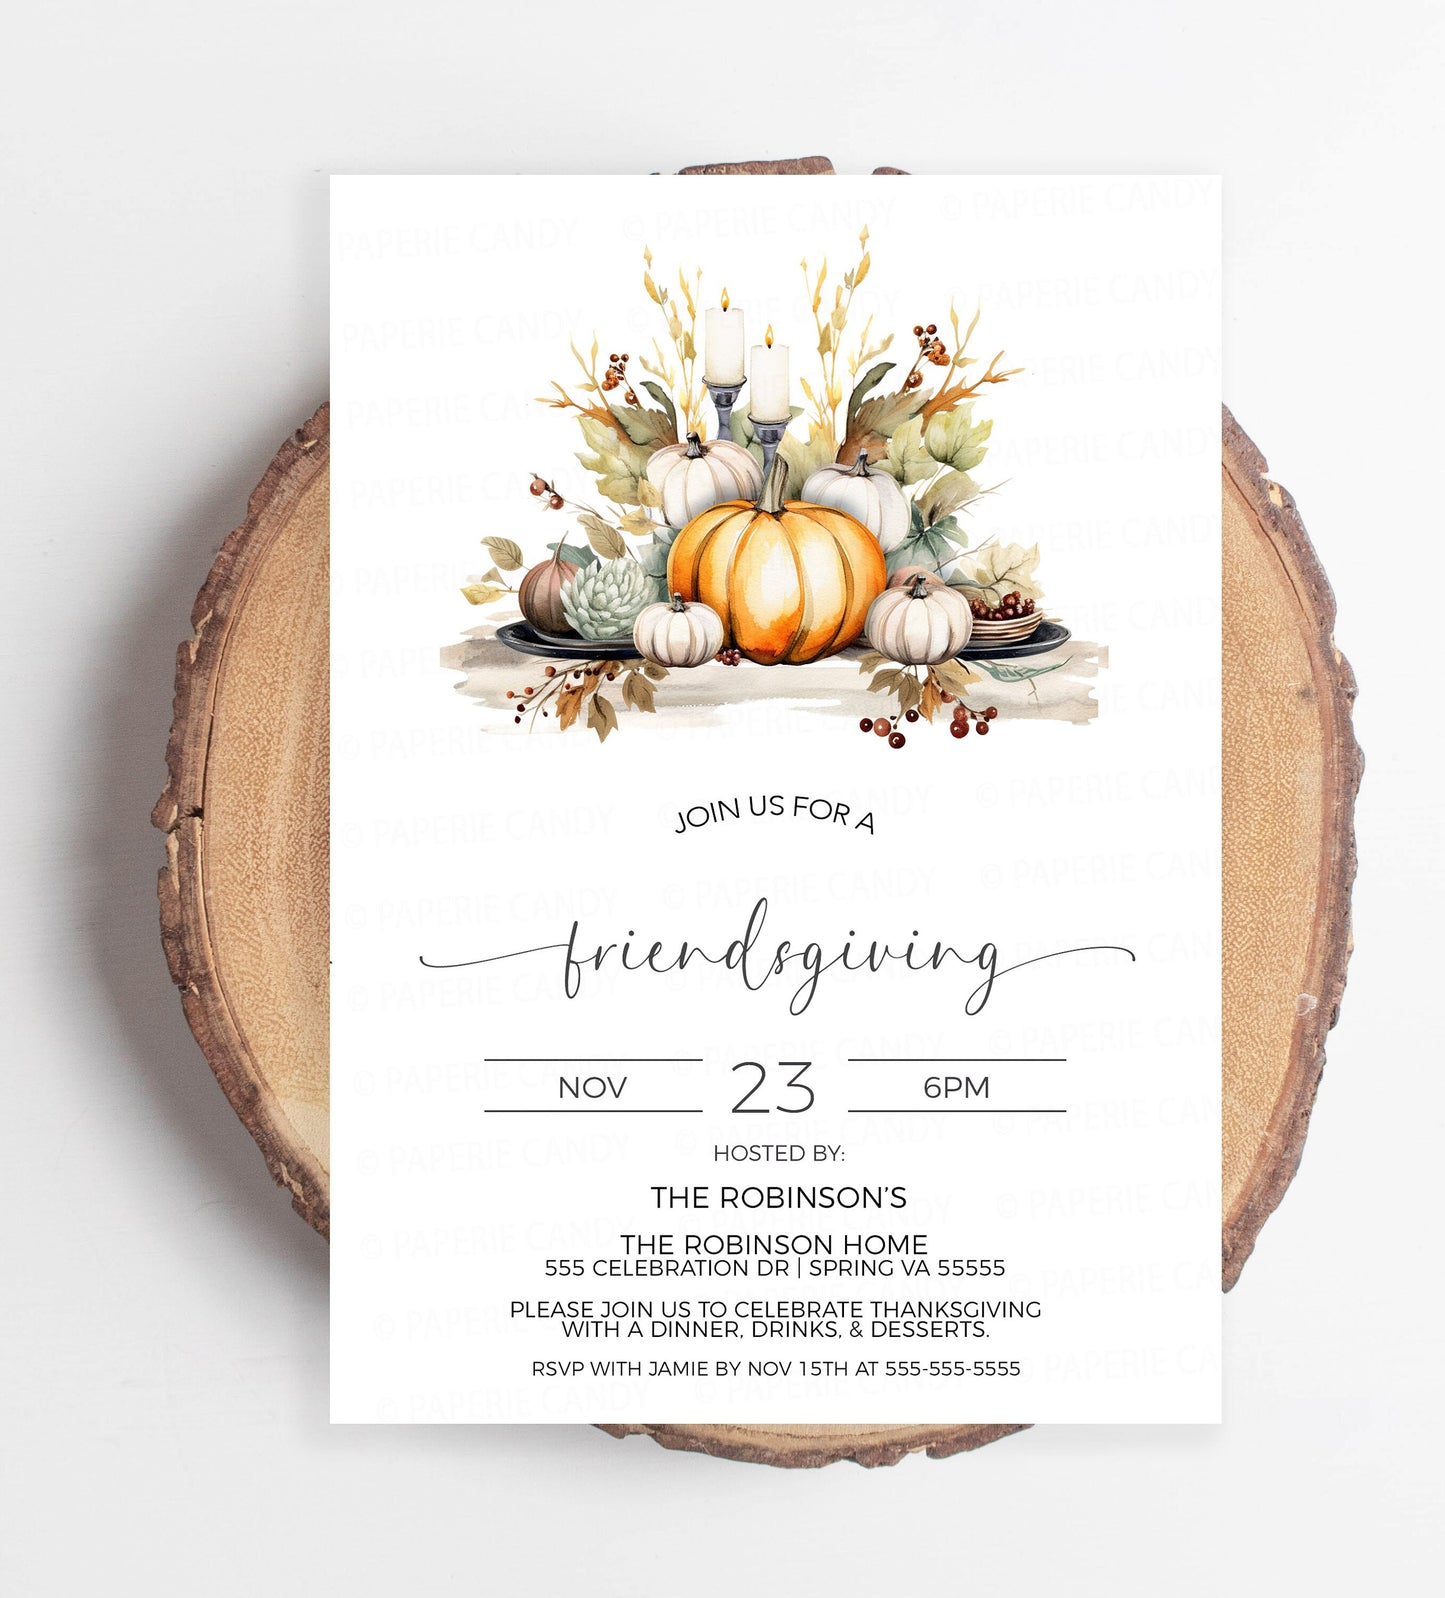 Friendsgiving Invitation, Thanksgiving Friends Party Invite, Fall Dinner Brunch Lunch Breakfast, Watercolor Pumpkins, Printable Template